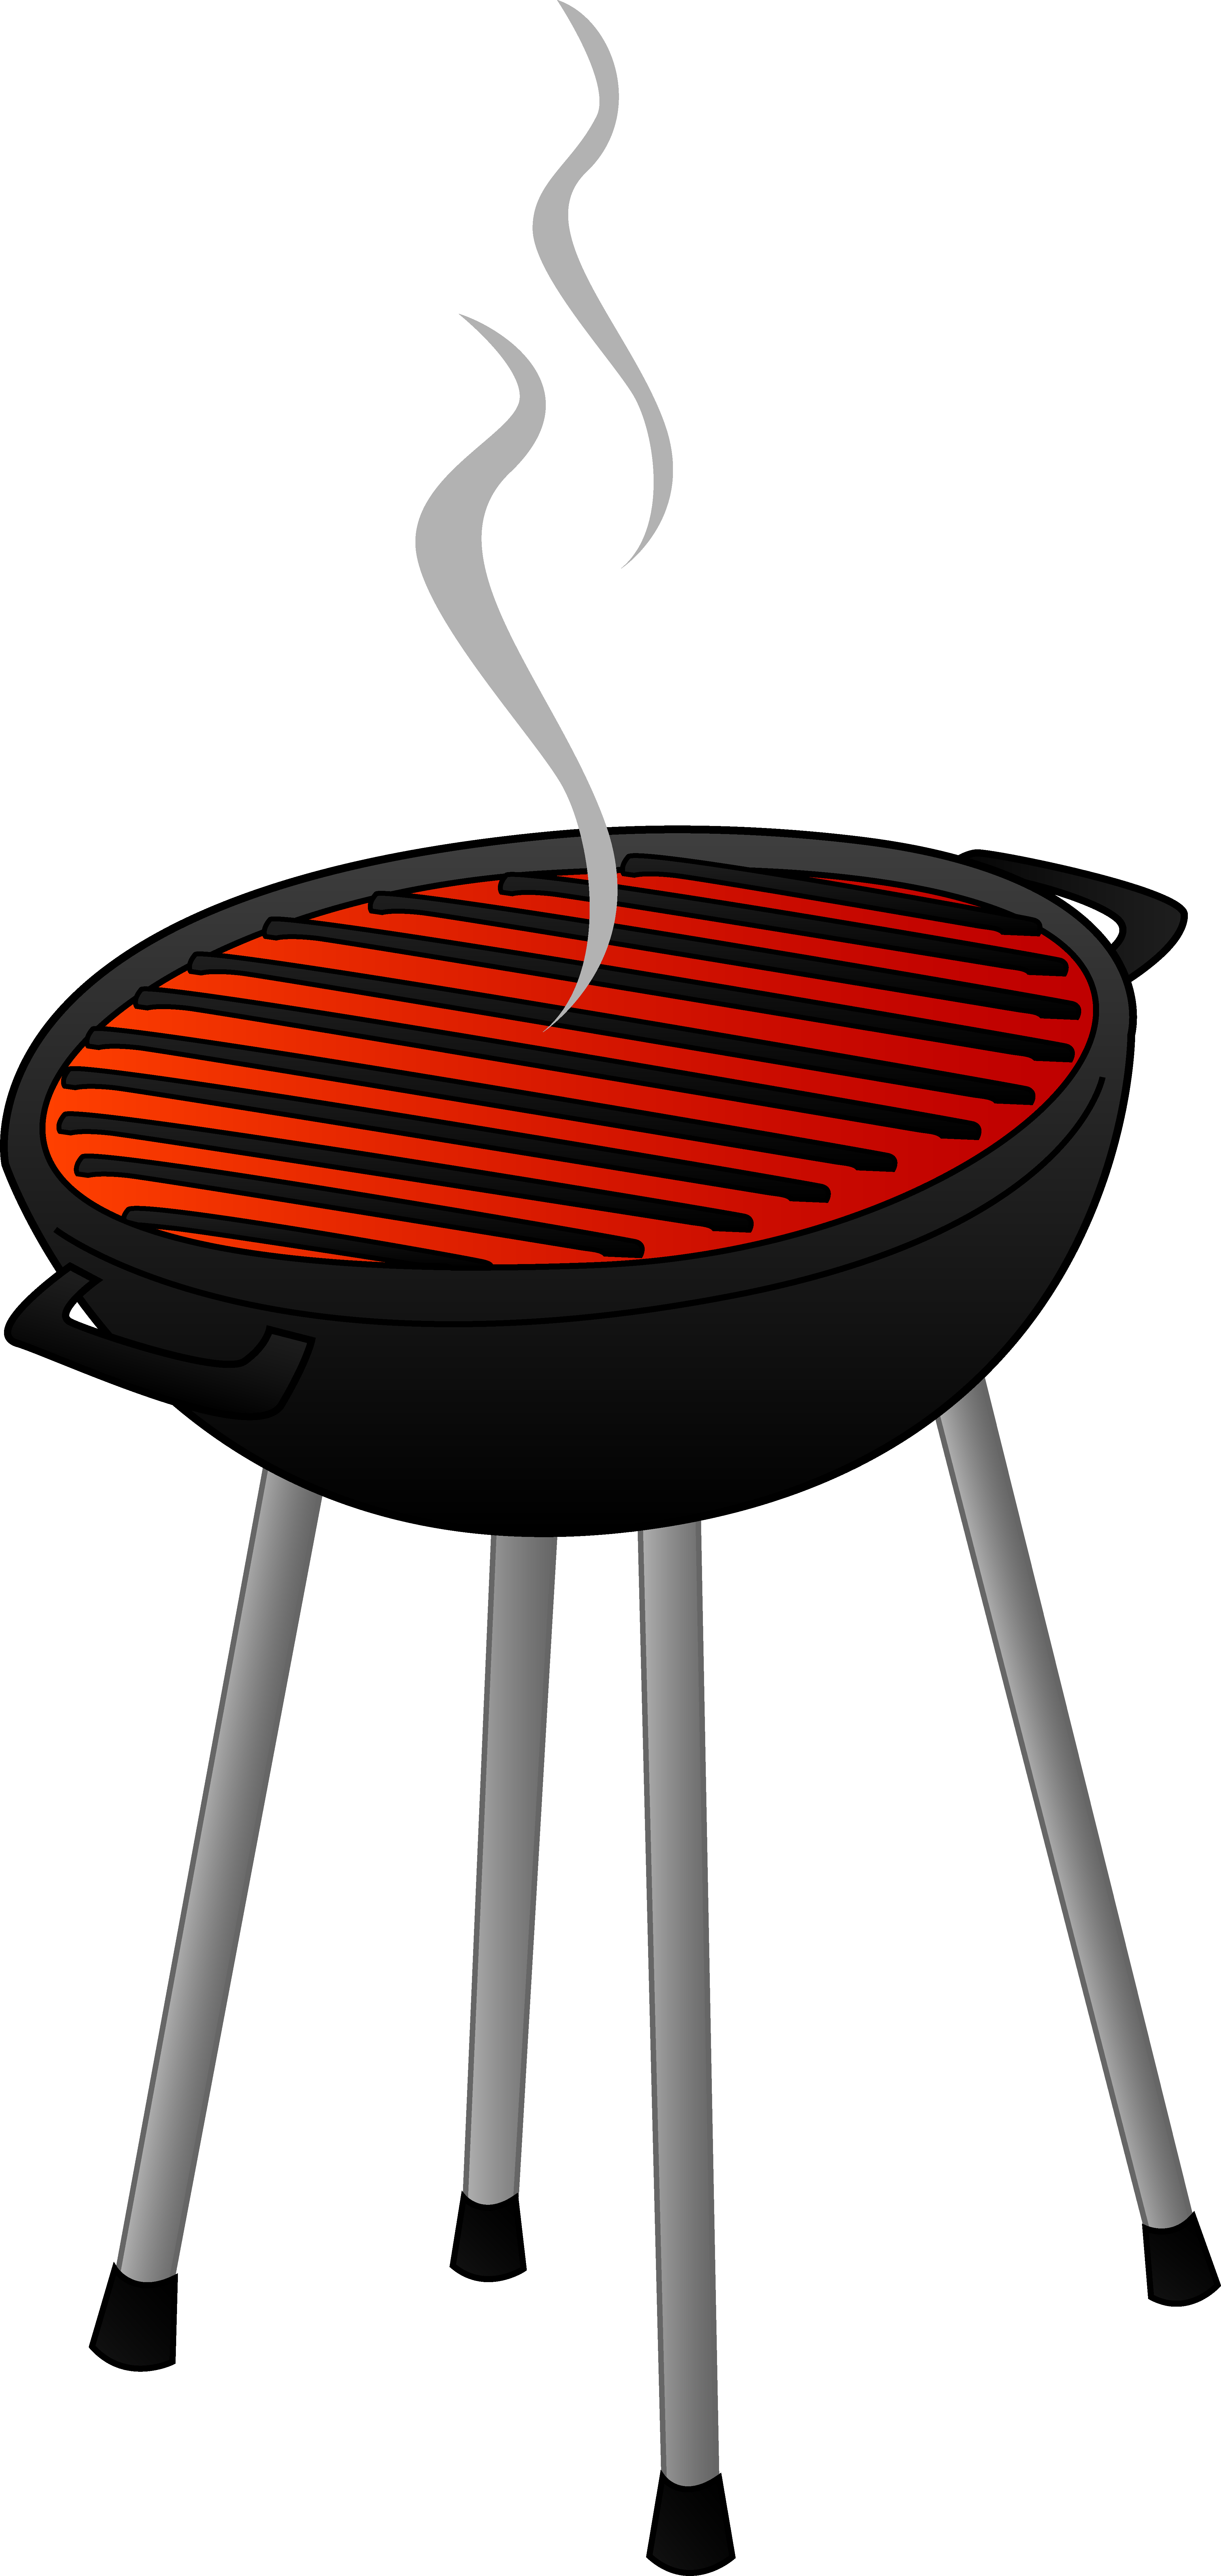 barbeque illustration free download